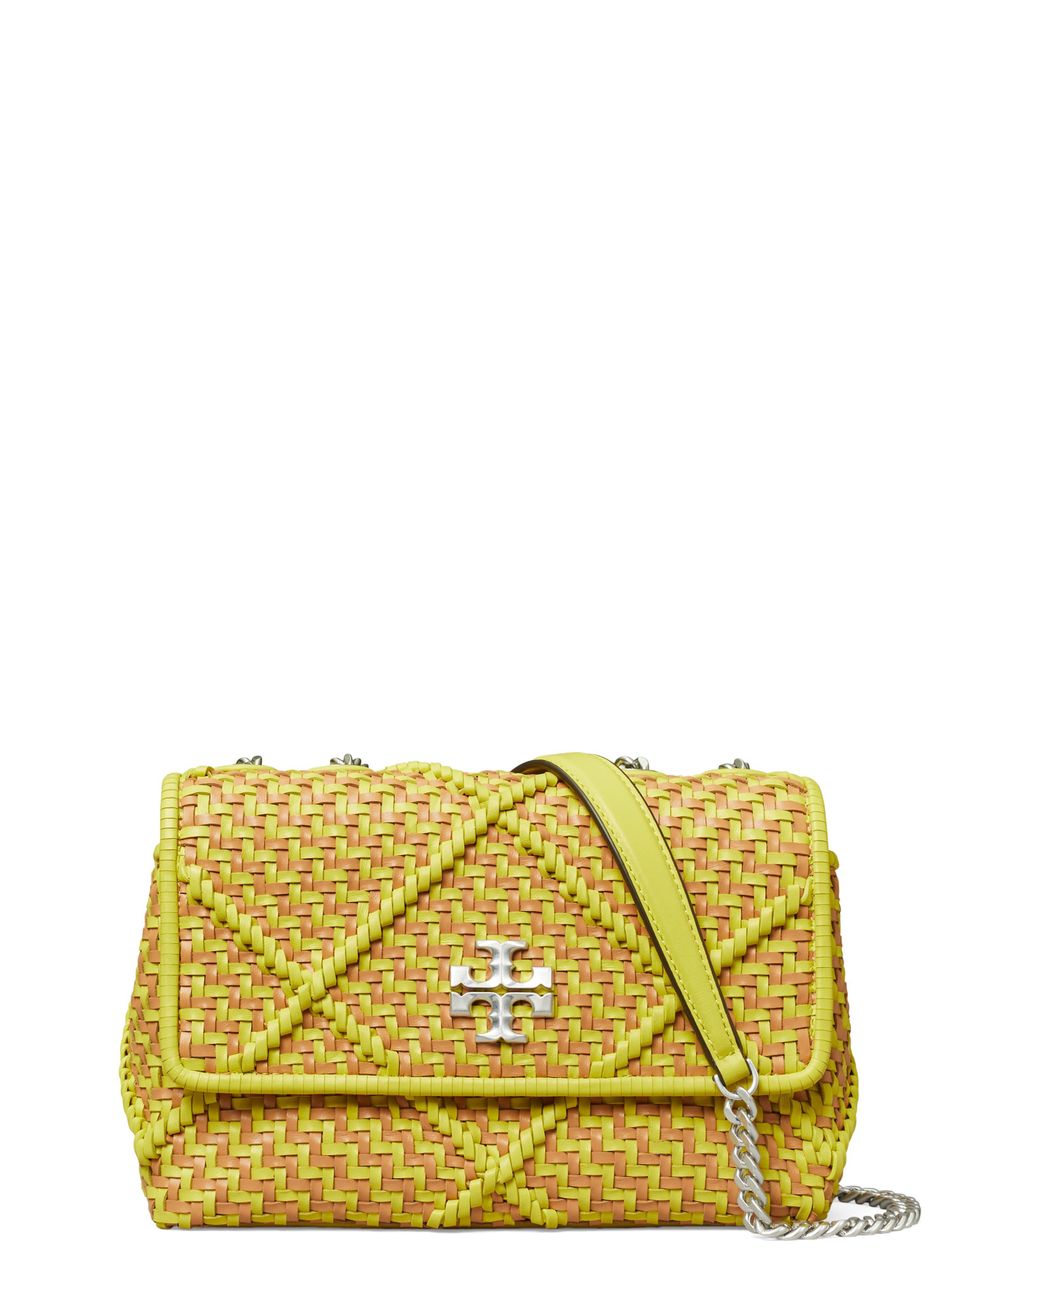 Tory Burch Kira Small Diamond Woven Convertible Shoulder Bag in Yellow